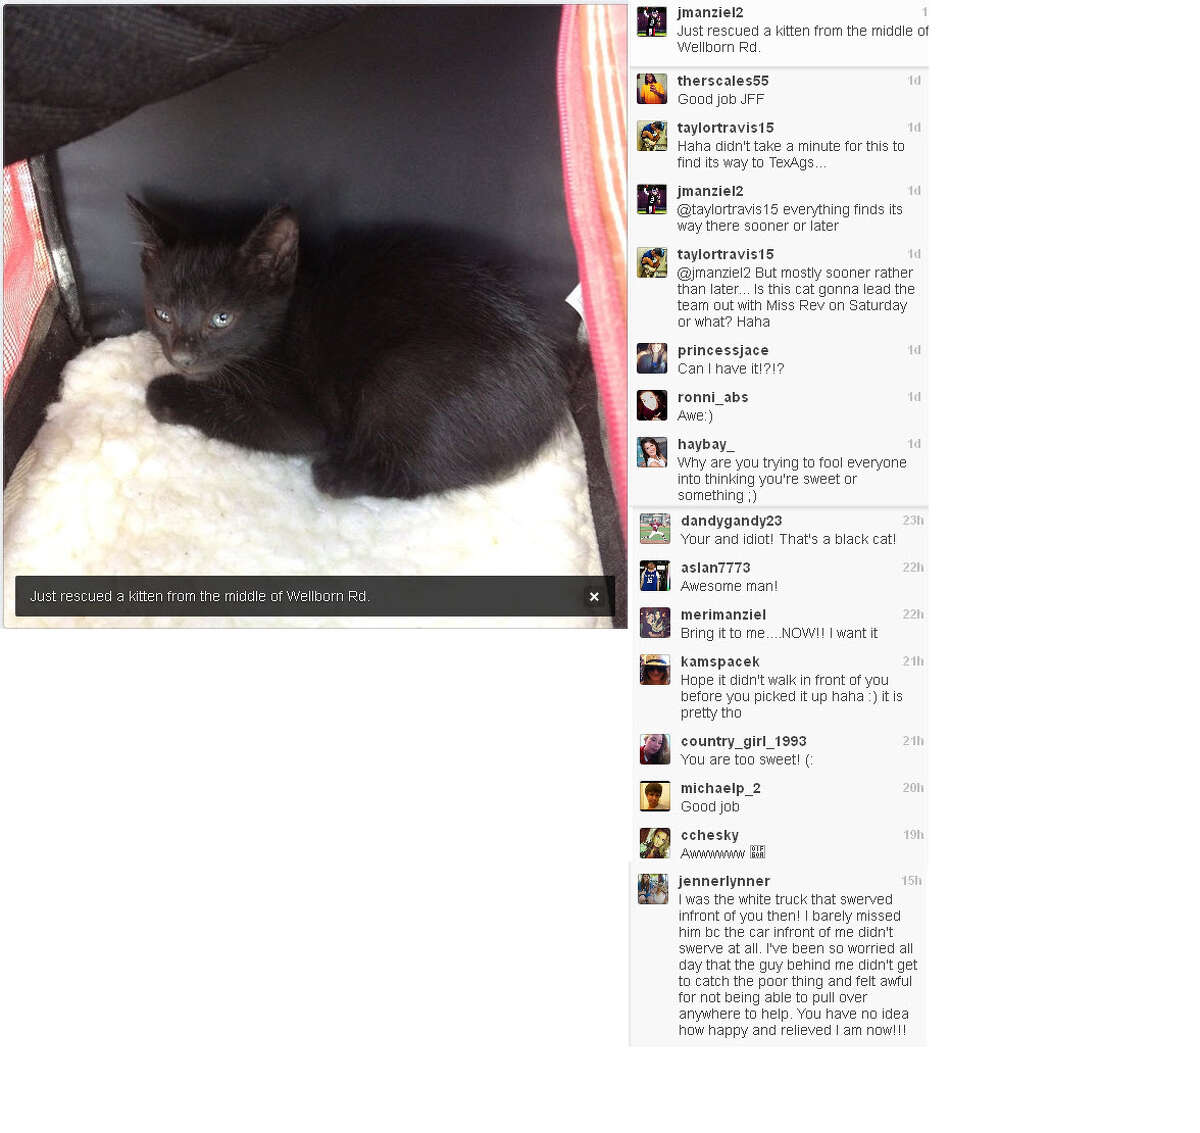 Johnny Manziel's instagram photo of a kitten he rescued.